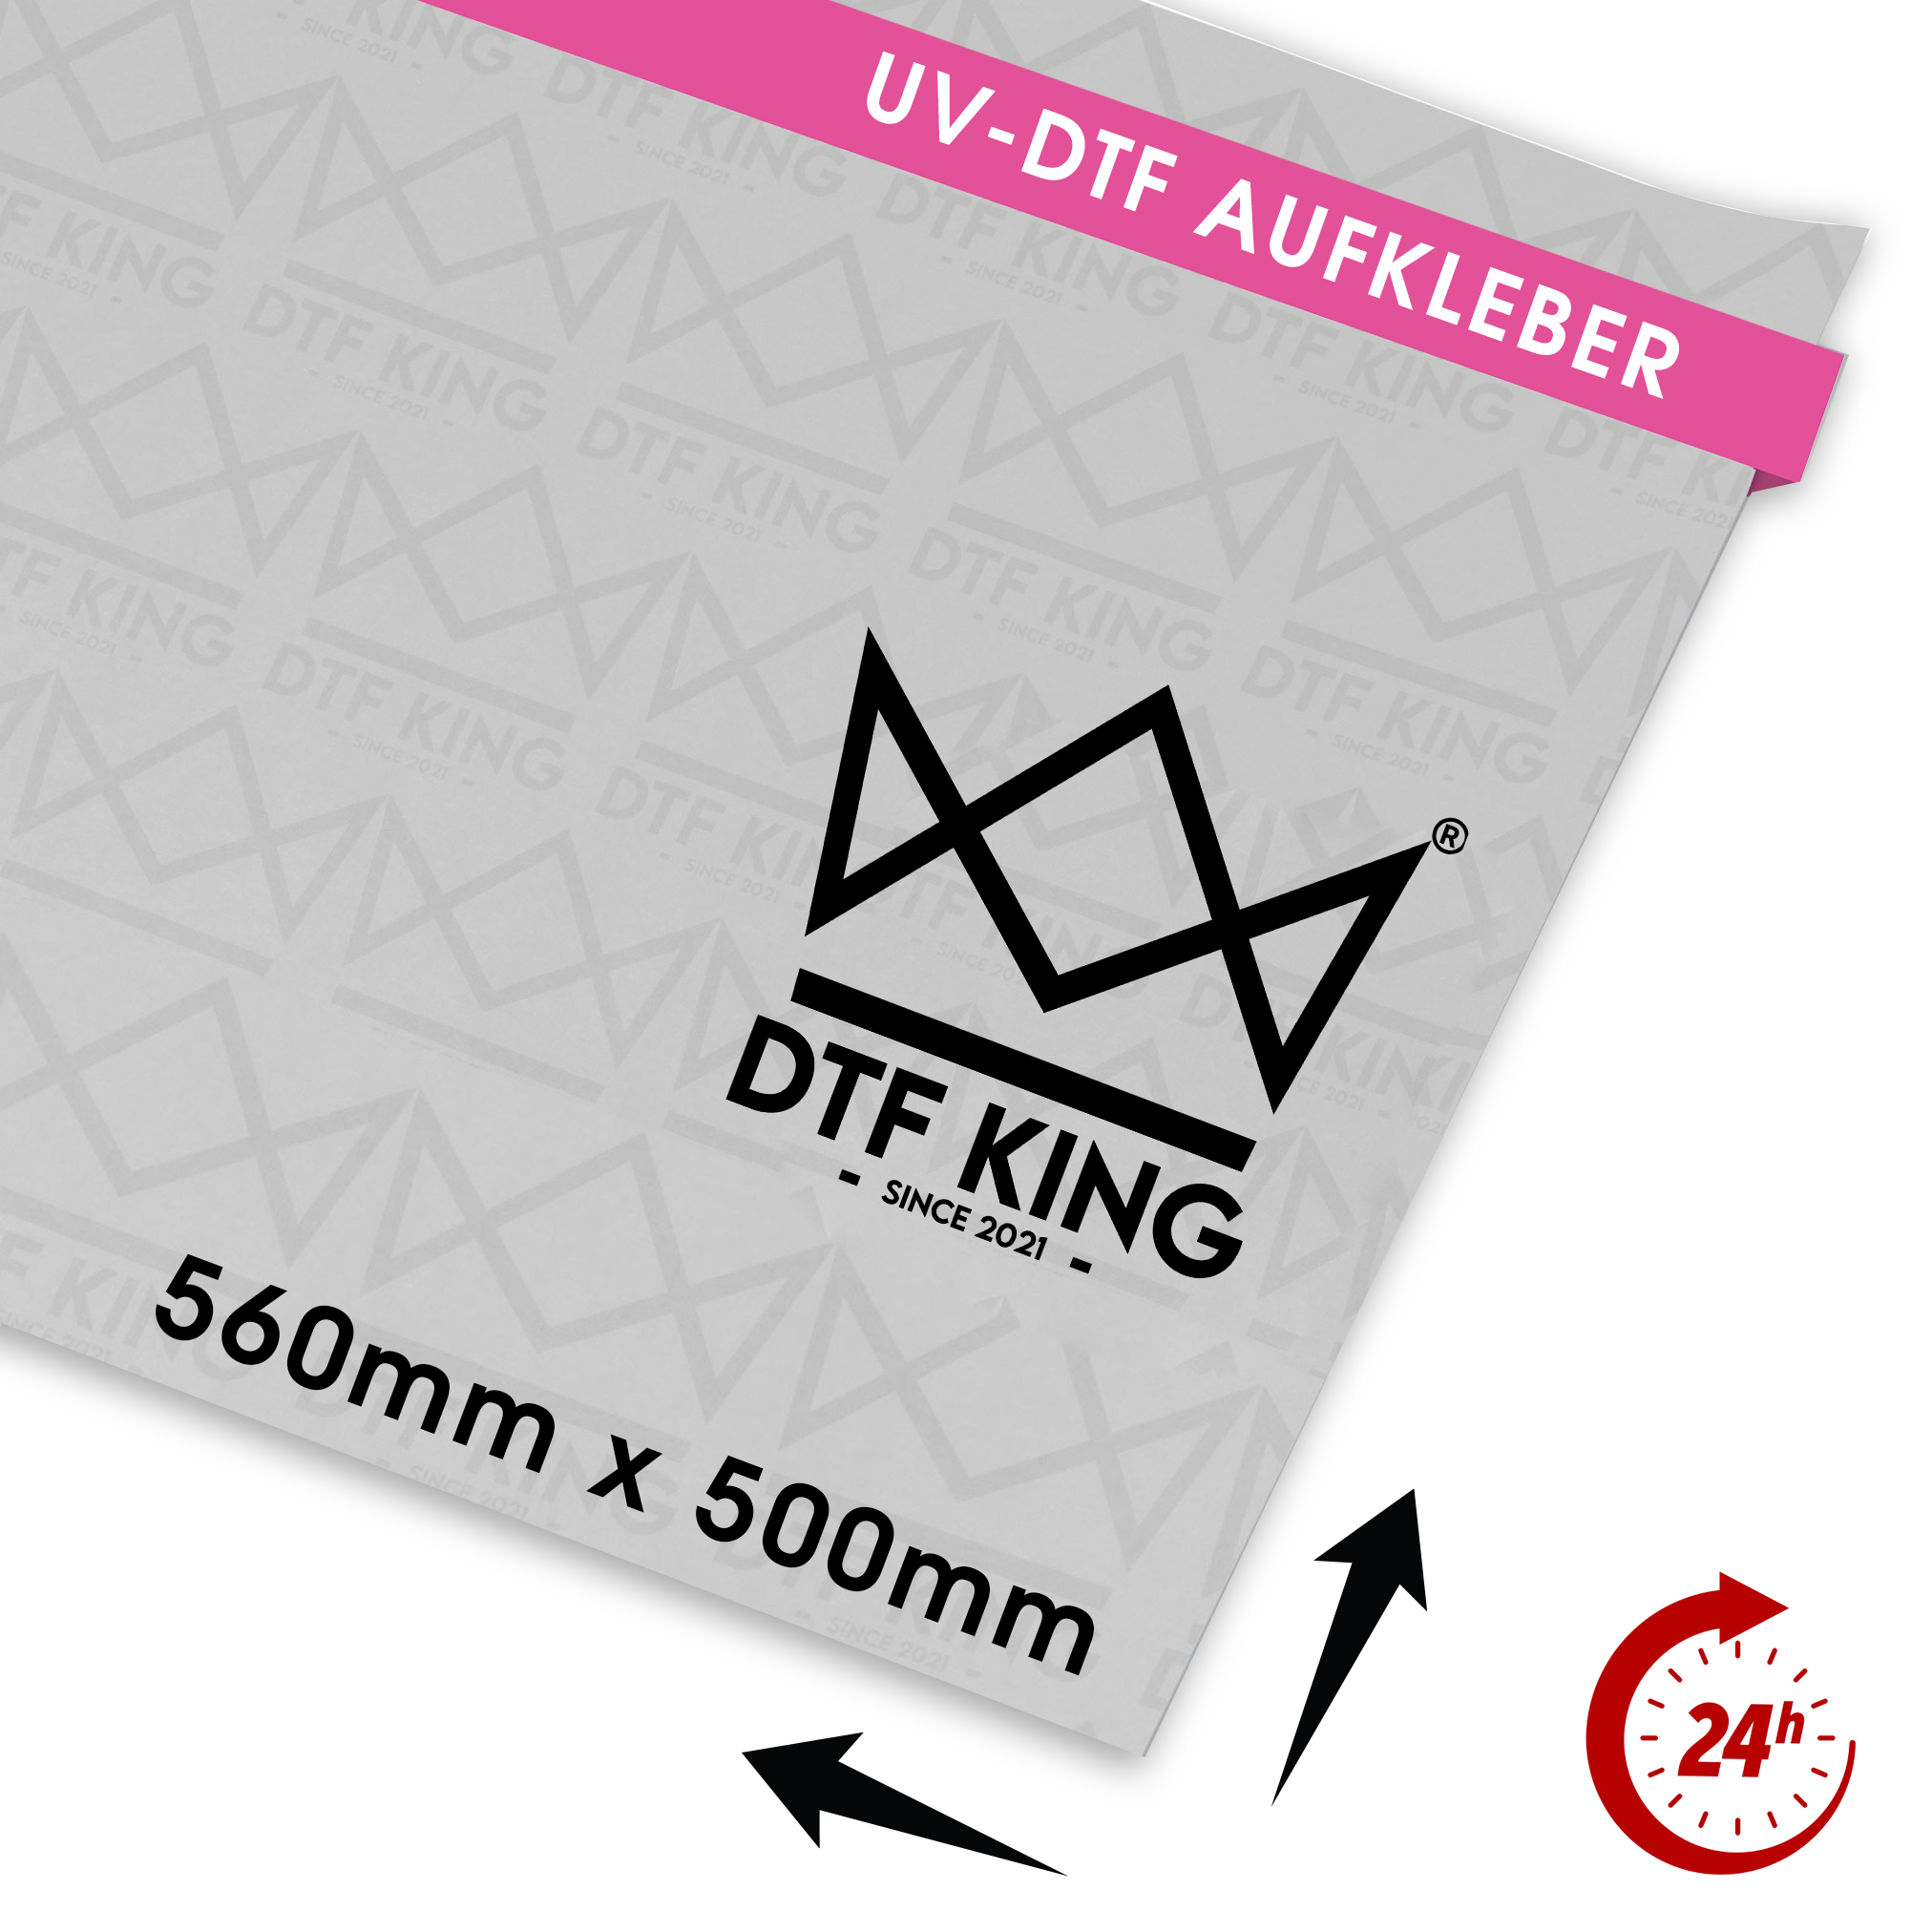 UV DTF Transfer EXPRESS 560 x 500 mm Aufkleber Sticker 